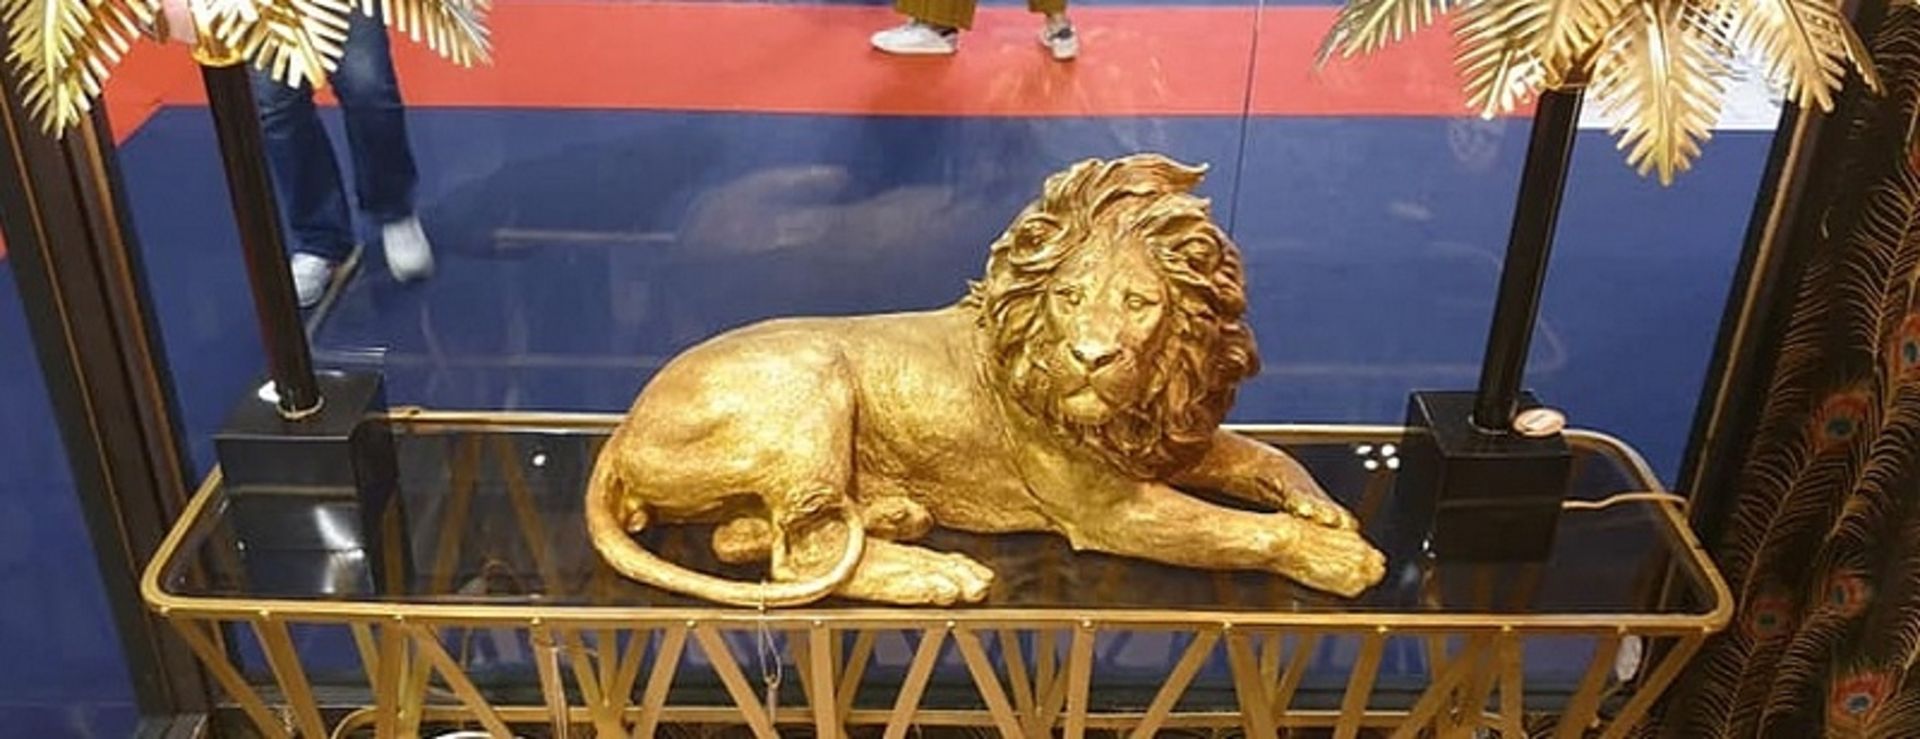 Lion Resin Sculpture - Image 2 of 2